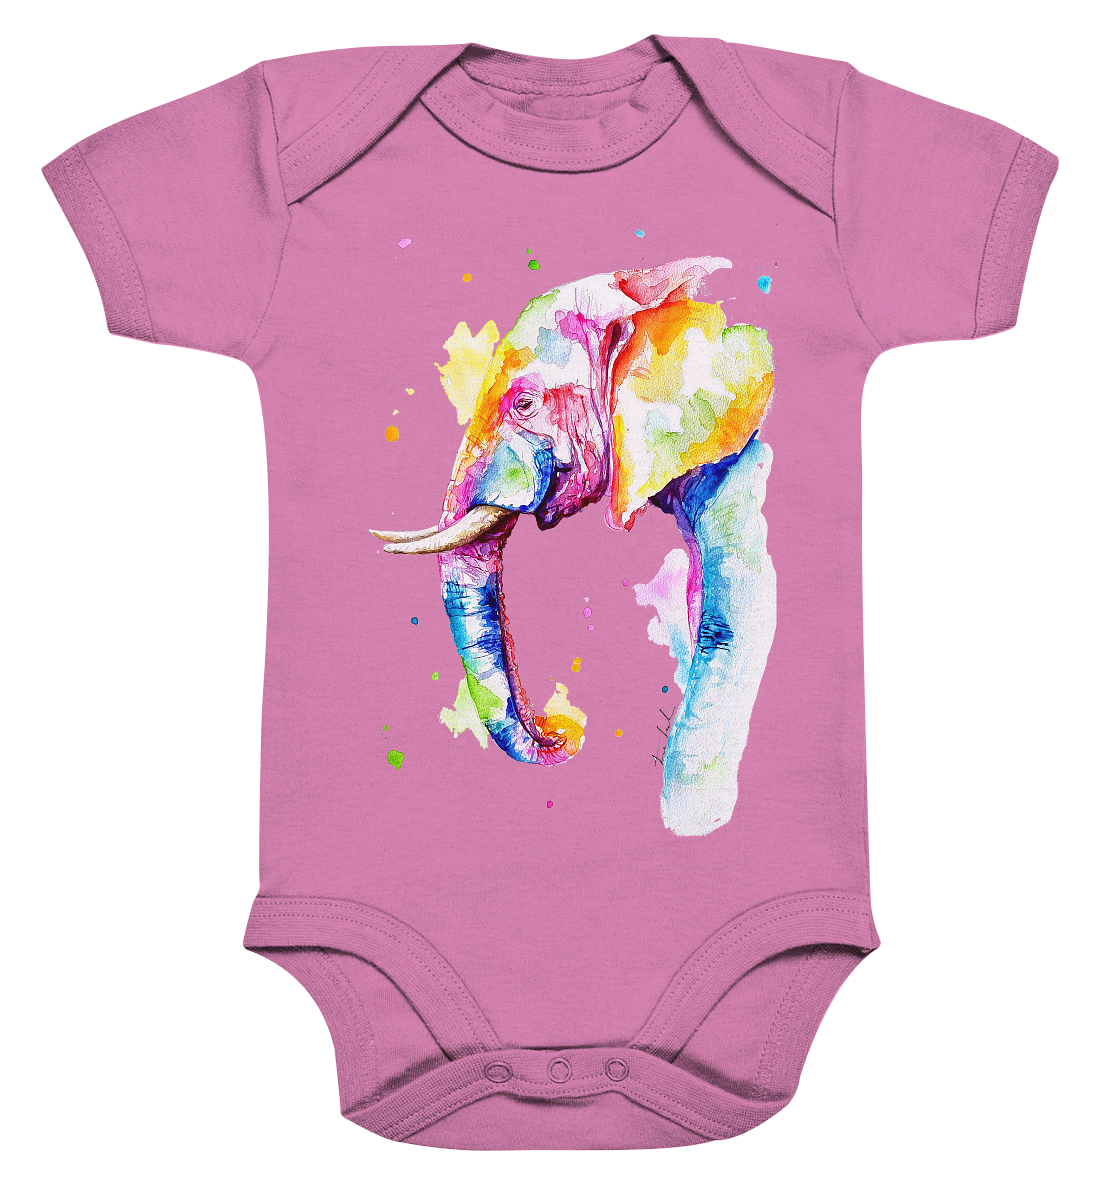 Bunter Elefant - Organic Baby Bodysuite